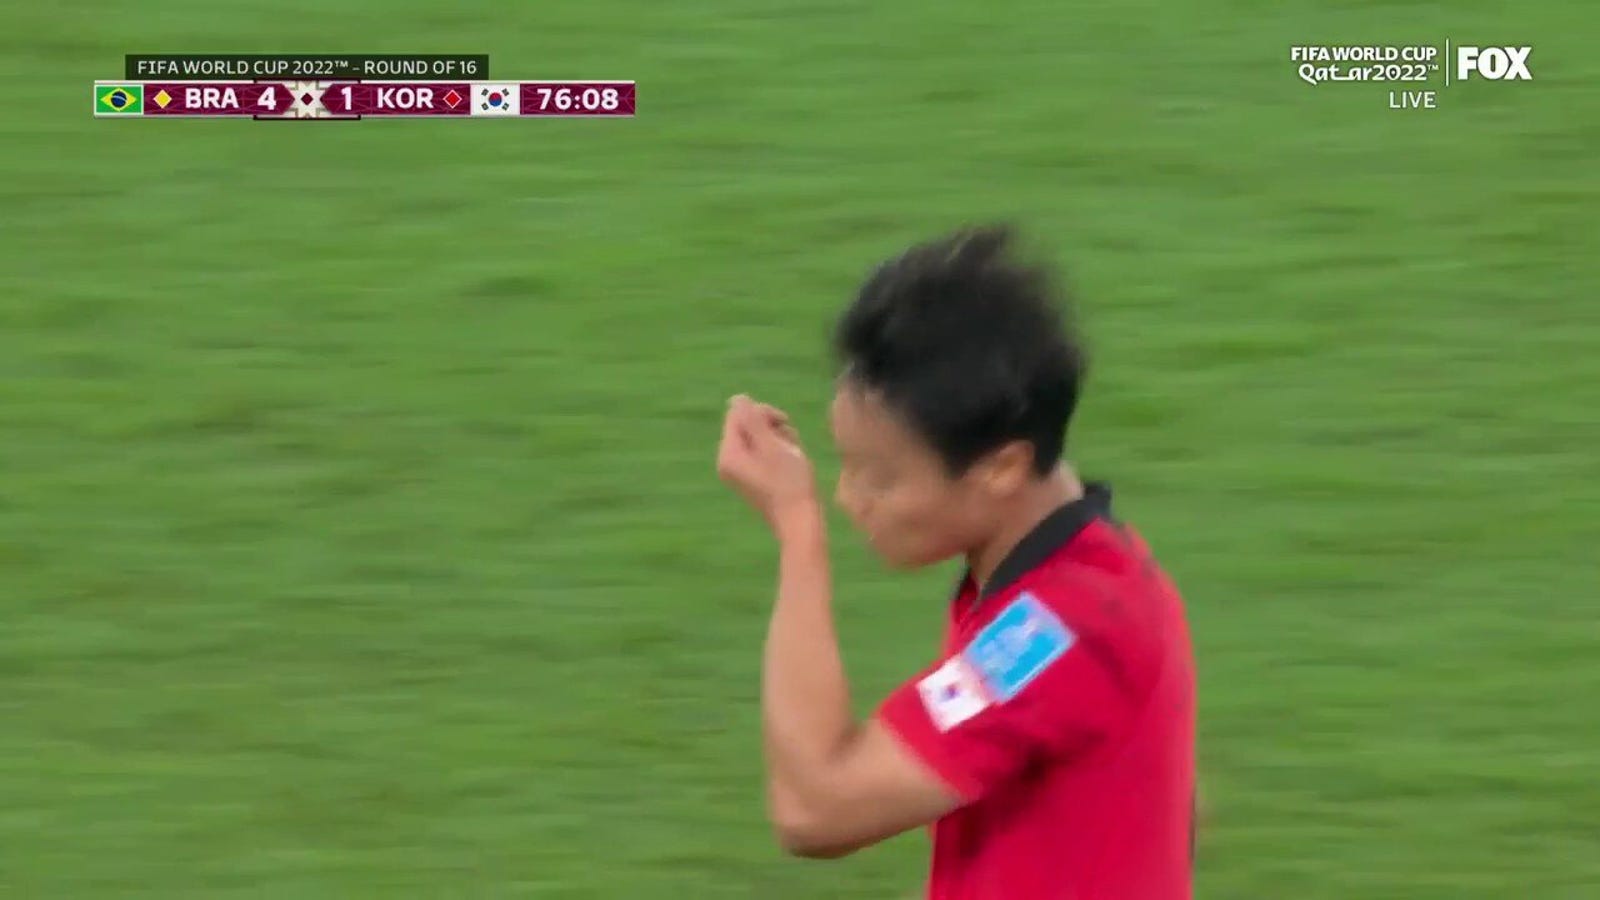 South Korea's Baek Seung-ho scores a goal against Brazil in 76 minutes